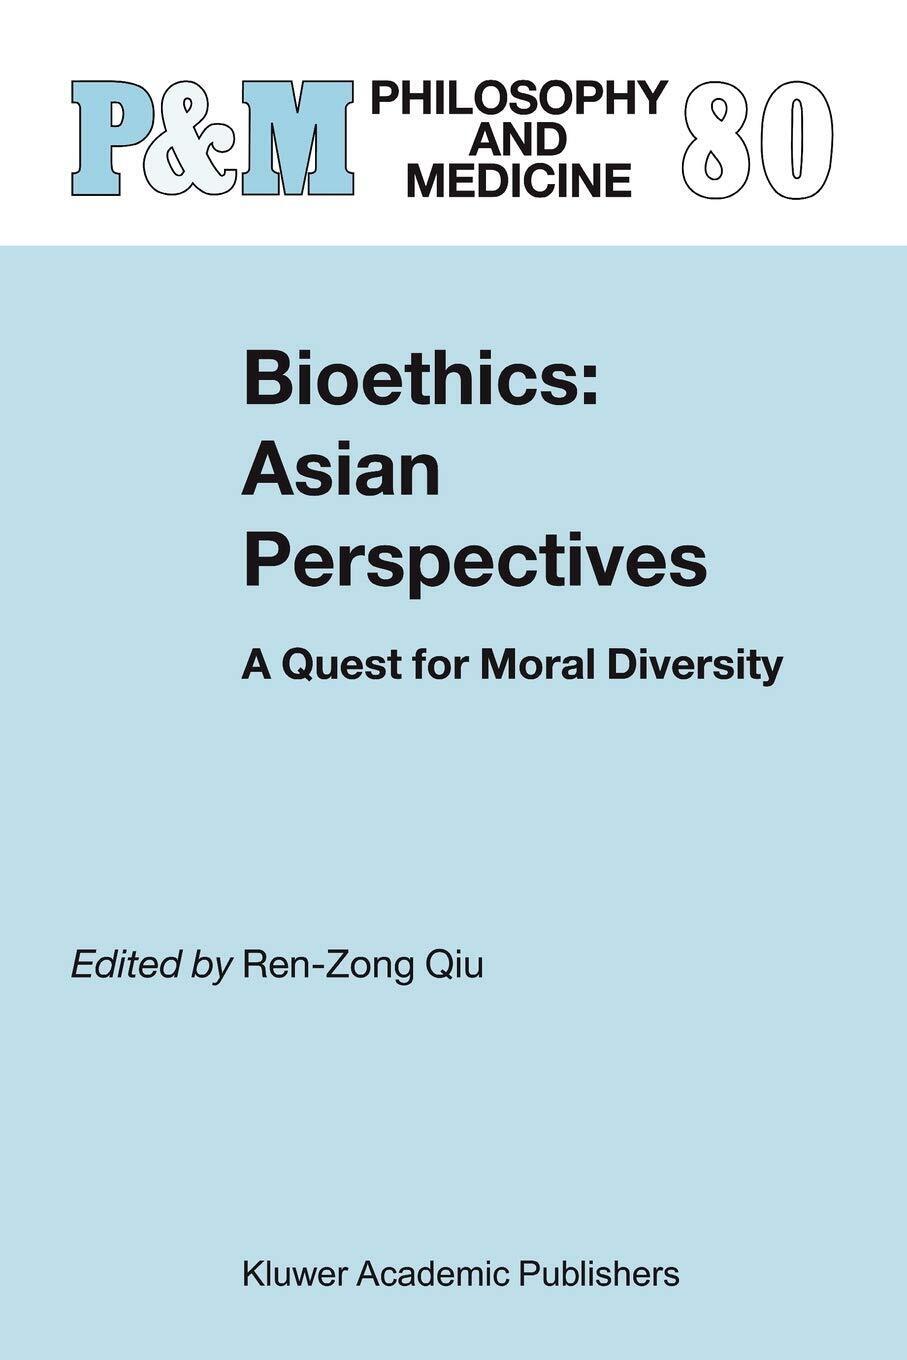 Bioethics: Asian Perspectives - Ren-zong Qiu - Springer, 2010